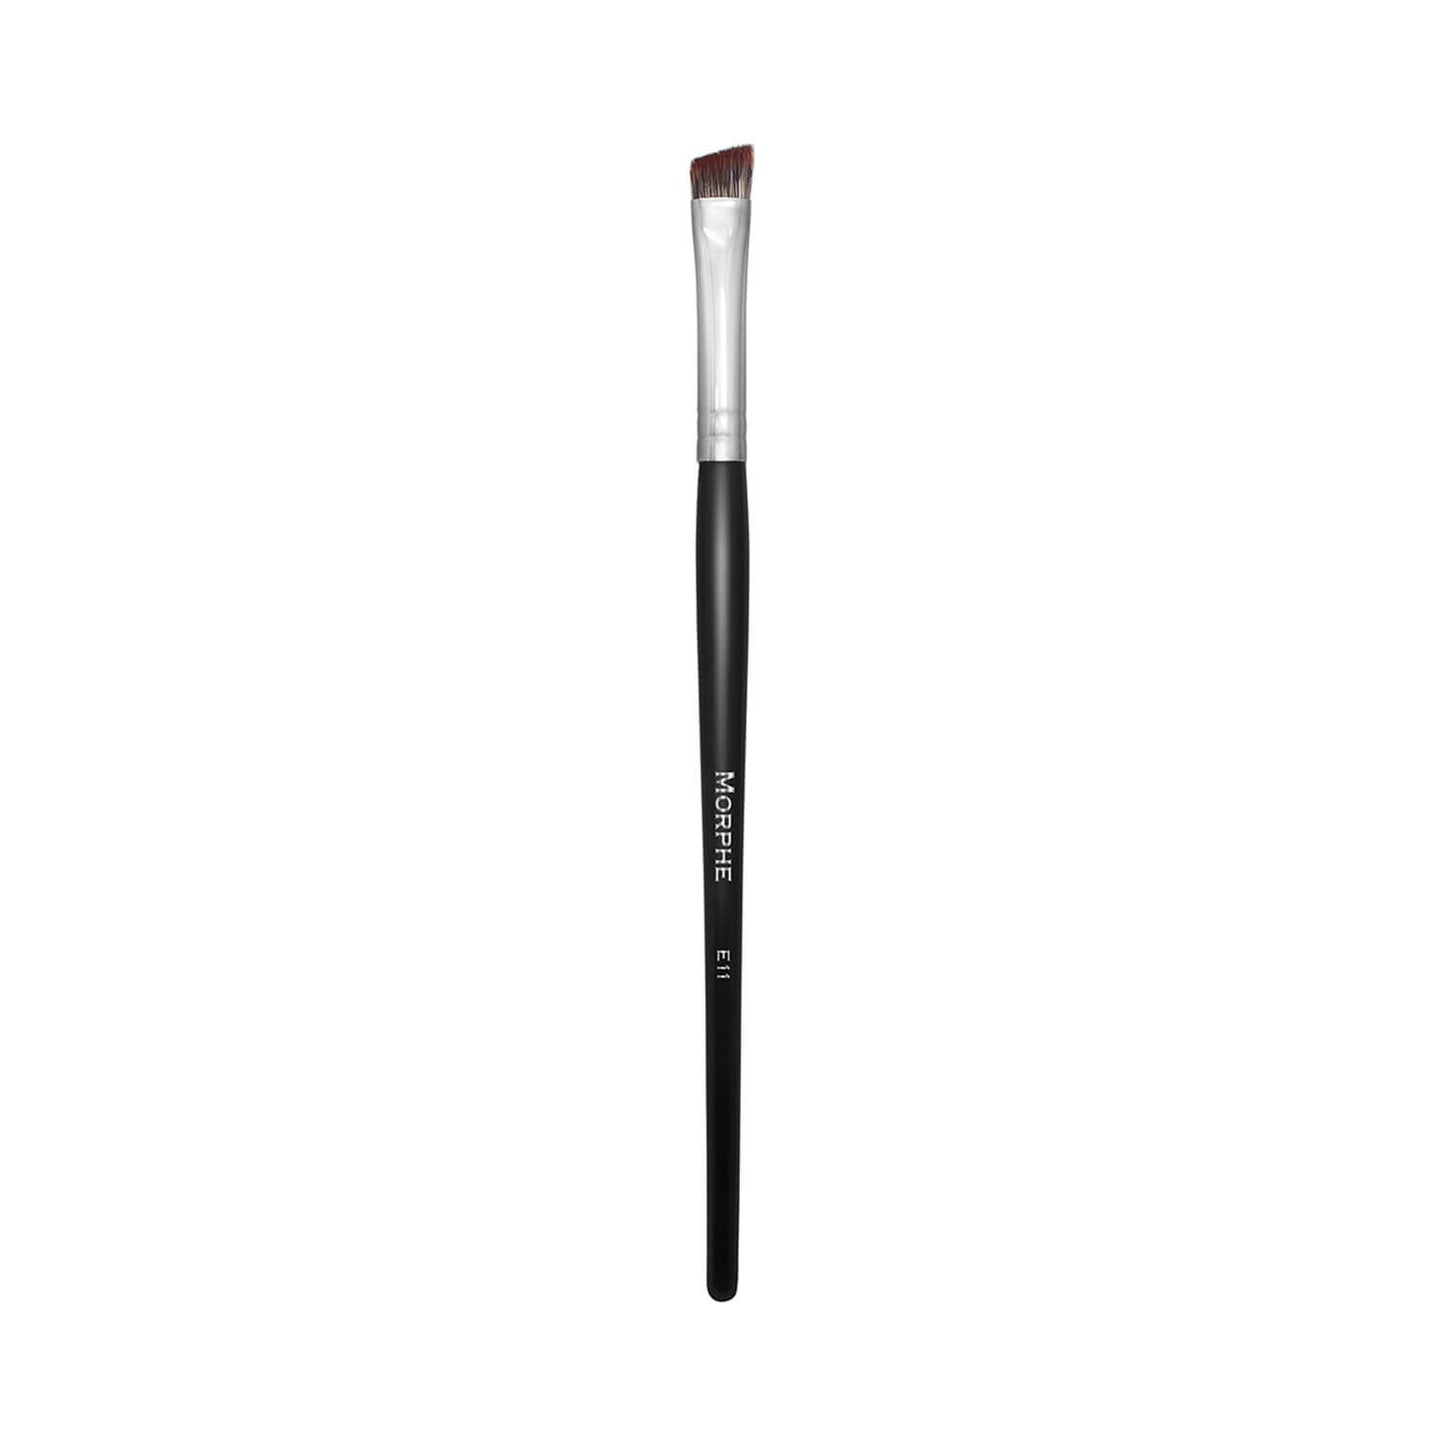 Morphe Cosmetics E11 Angled Brow Brush